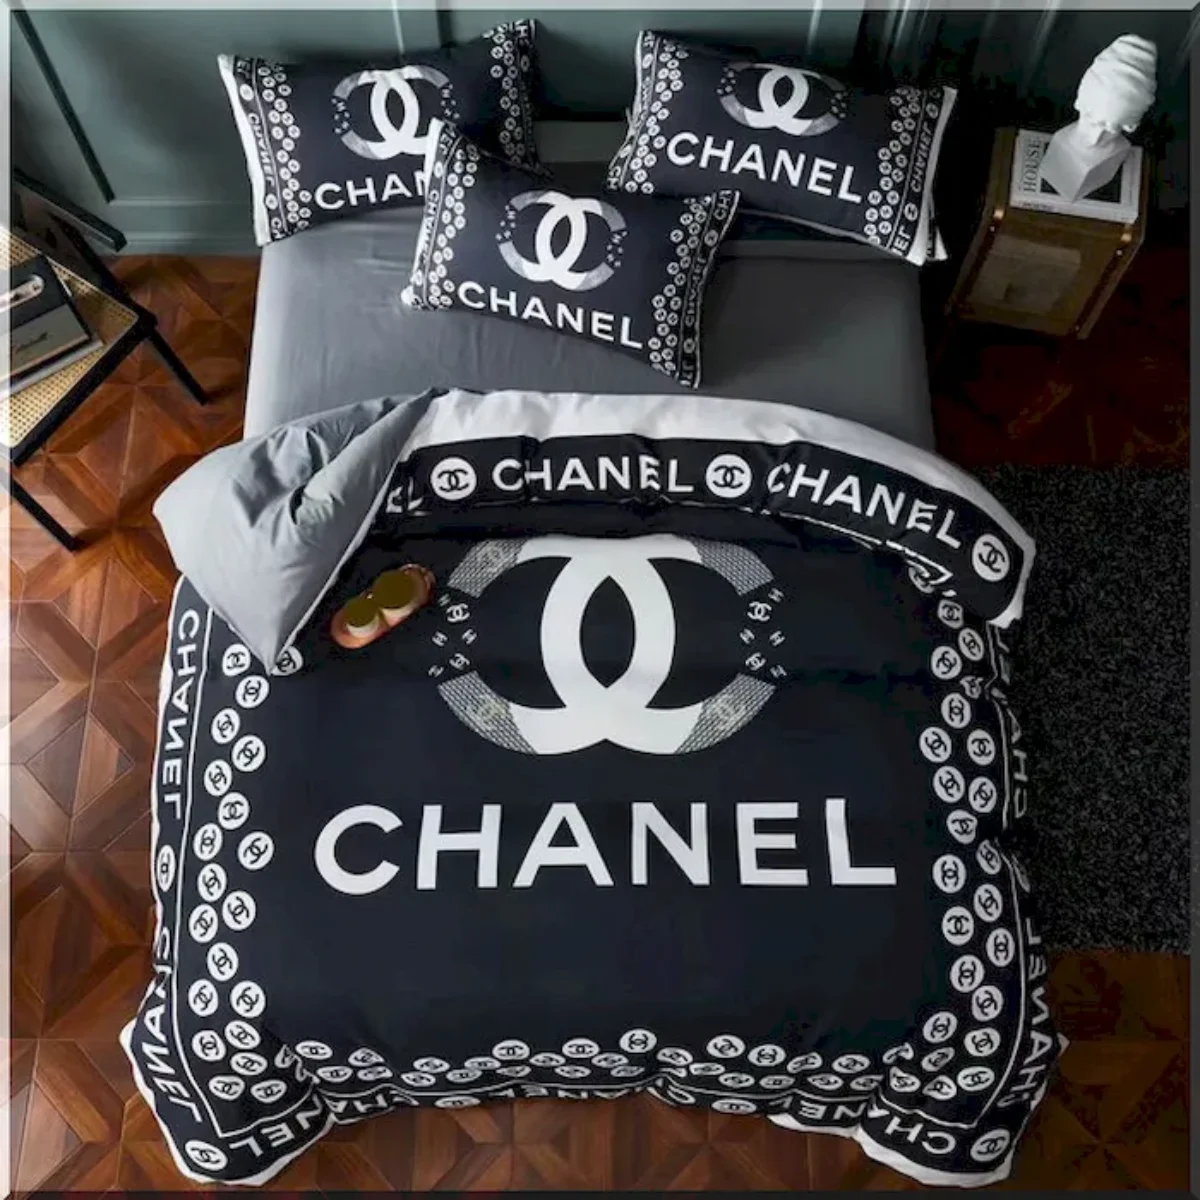 coco chanel comforter sets queen